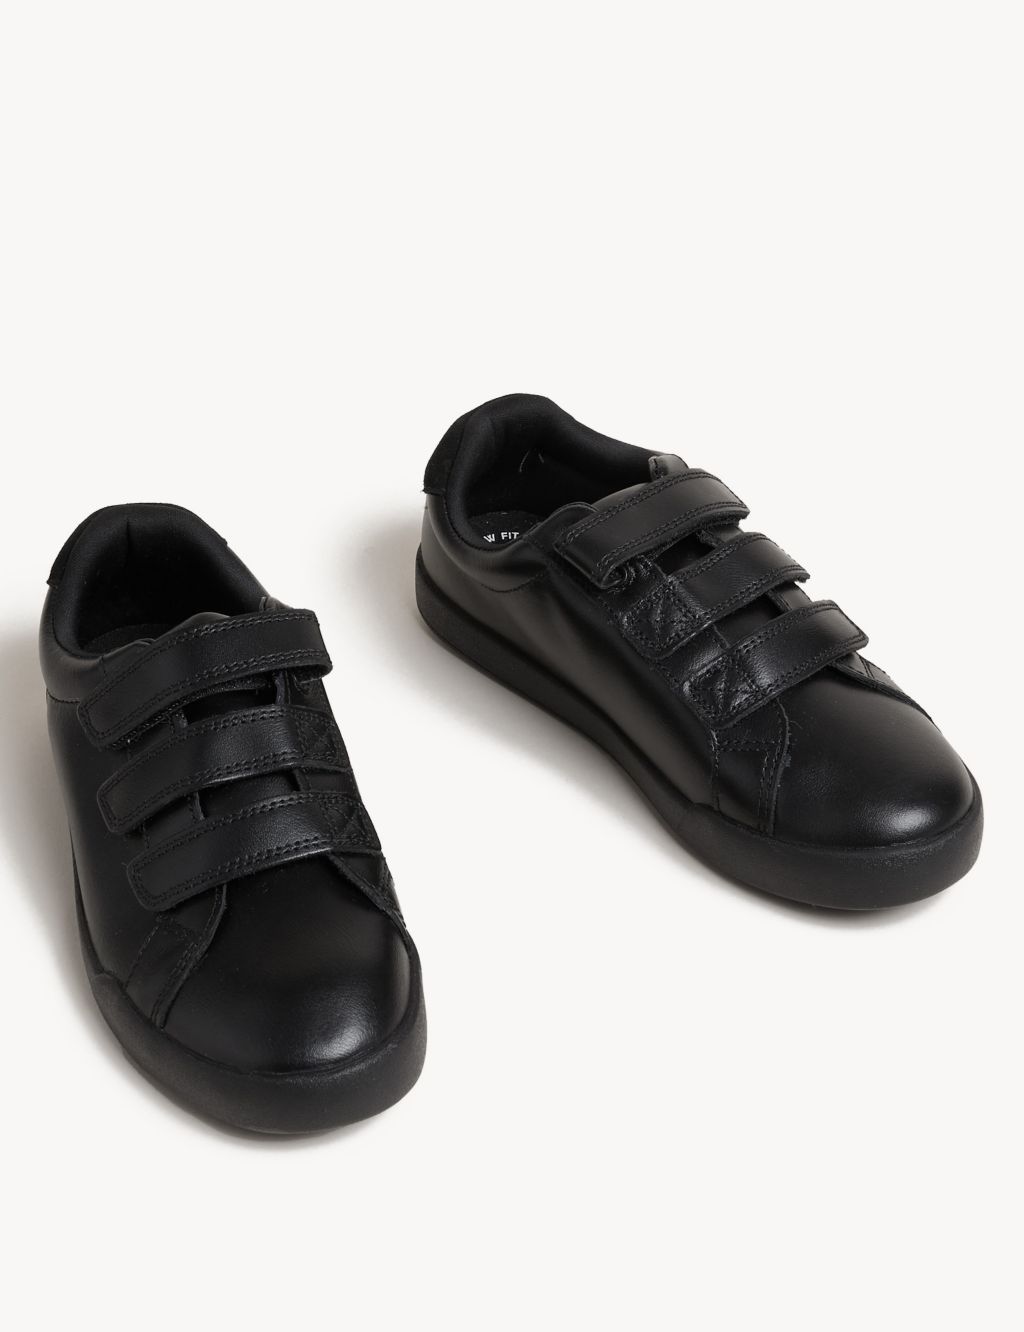 Kids' Leather Freshfeet™ School Shoes (2½ - 9 Large) image 2